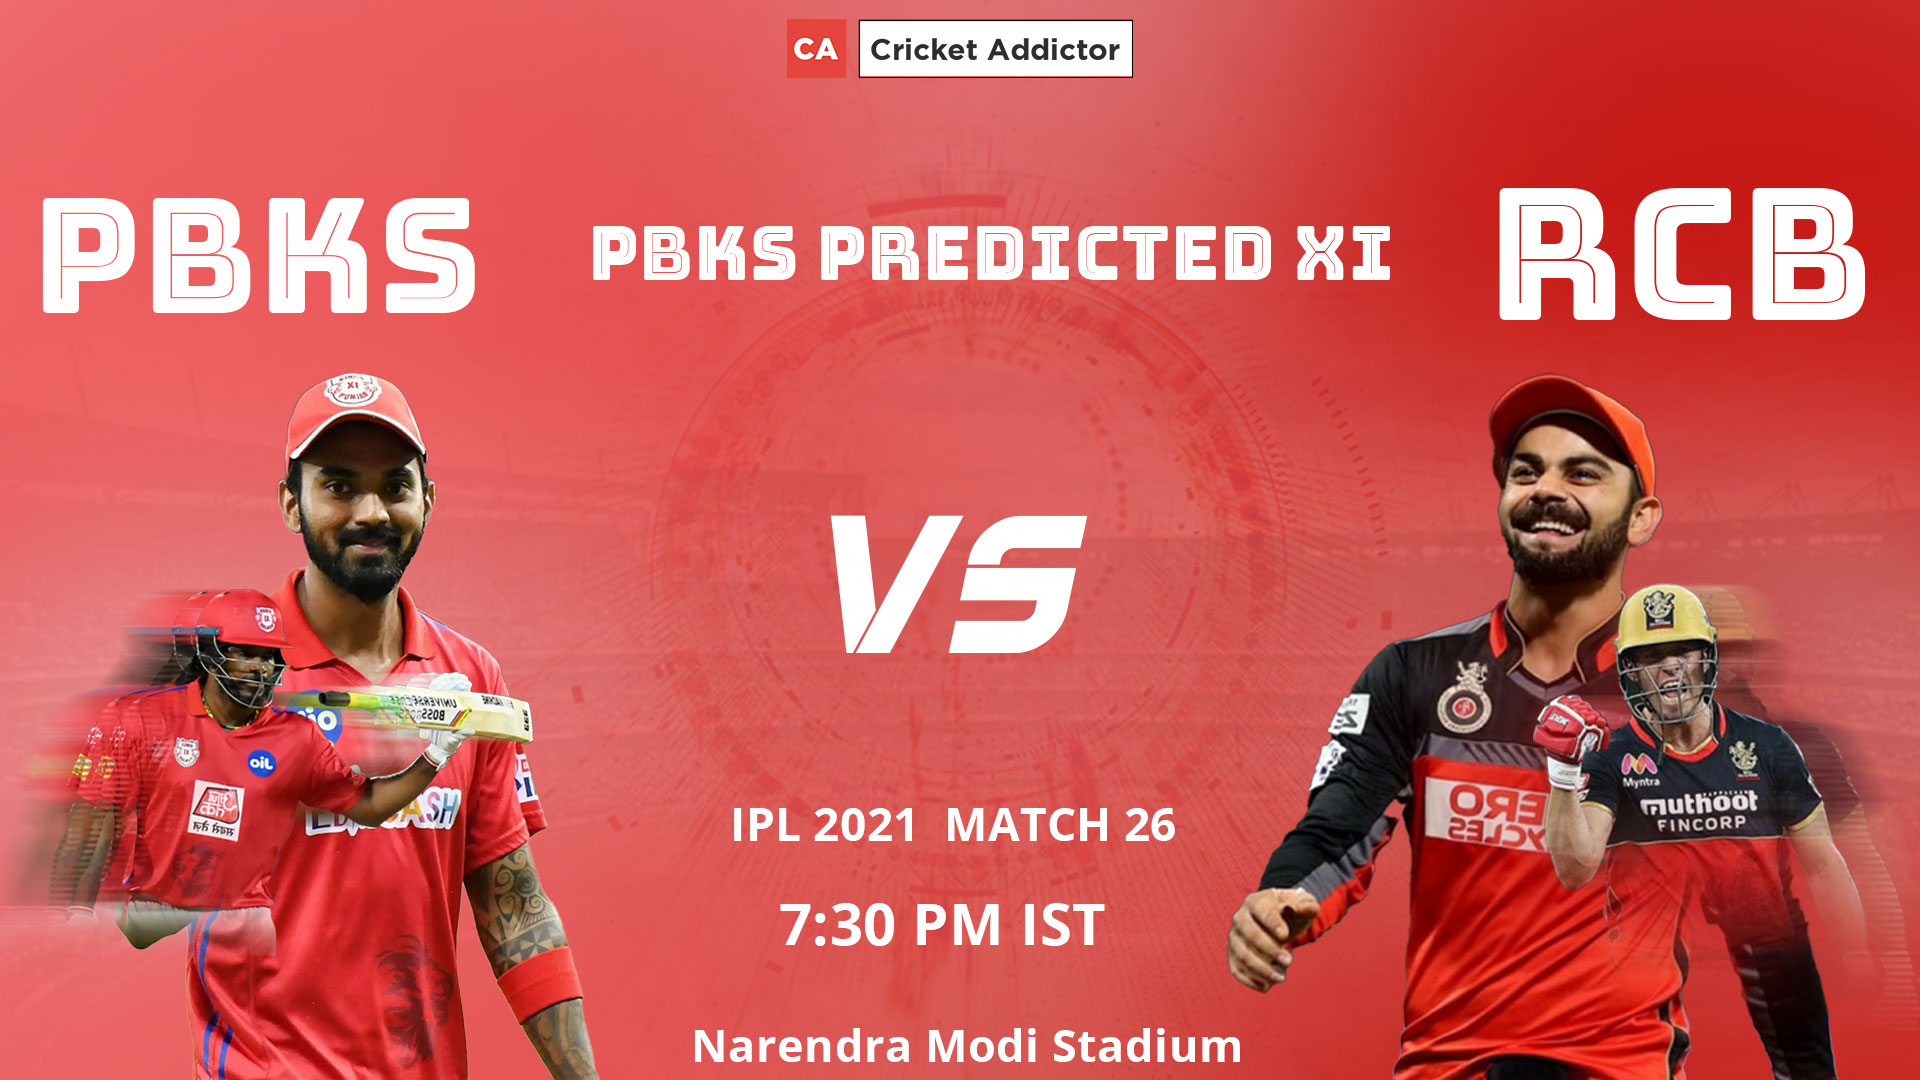 IPL 2021, PBKS, Punjab Kings, predicted playing XI, playing XI, PBKS vs RCB